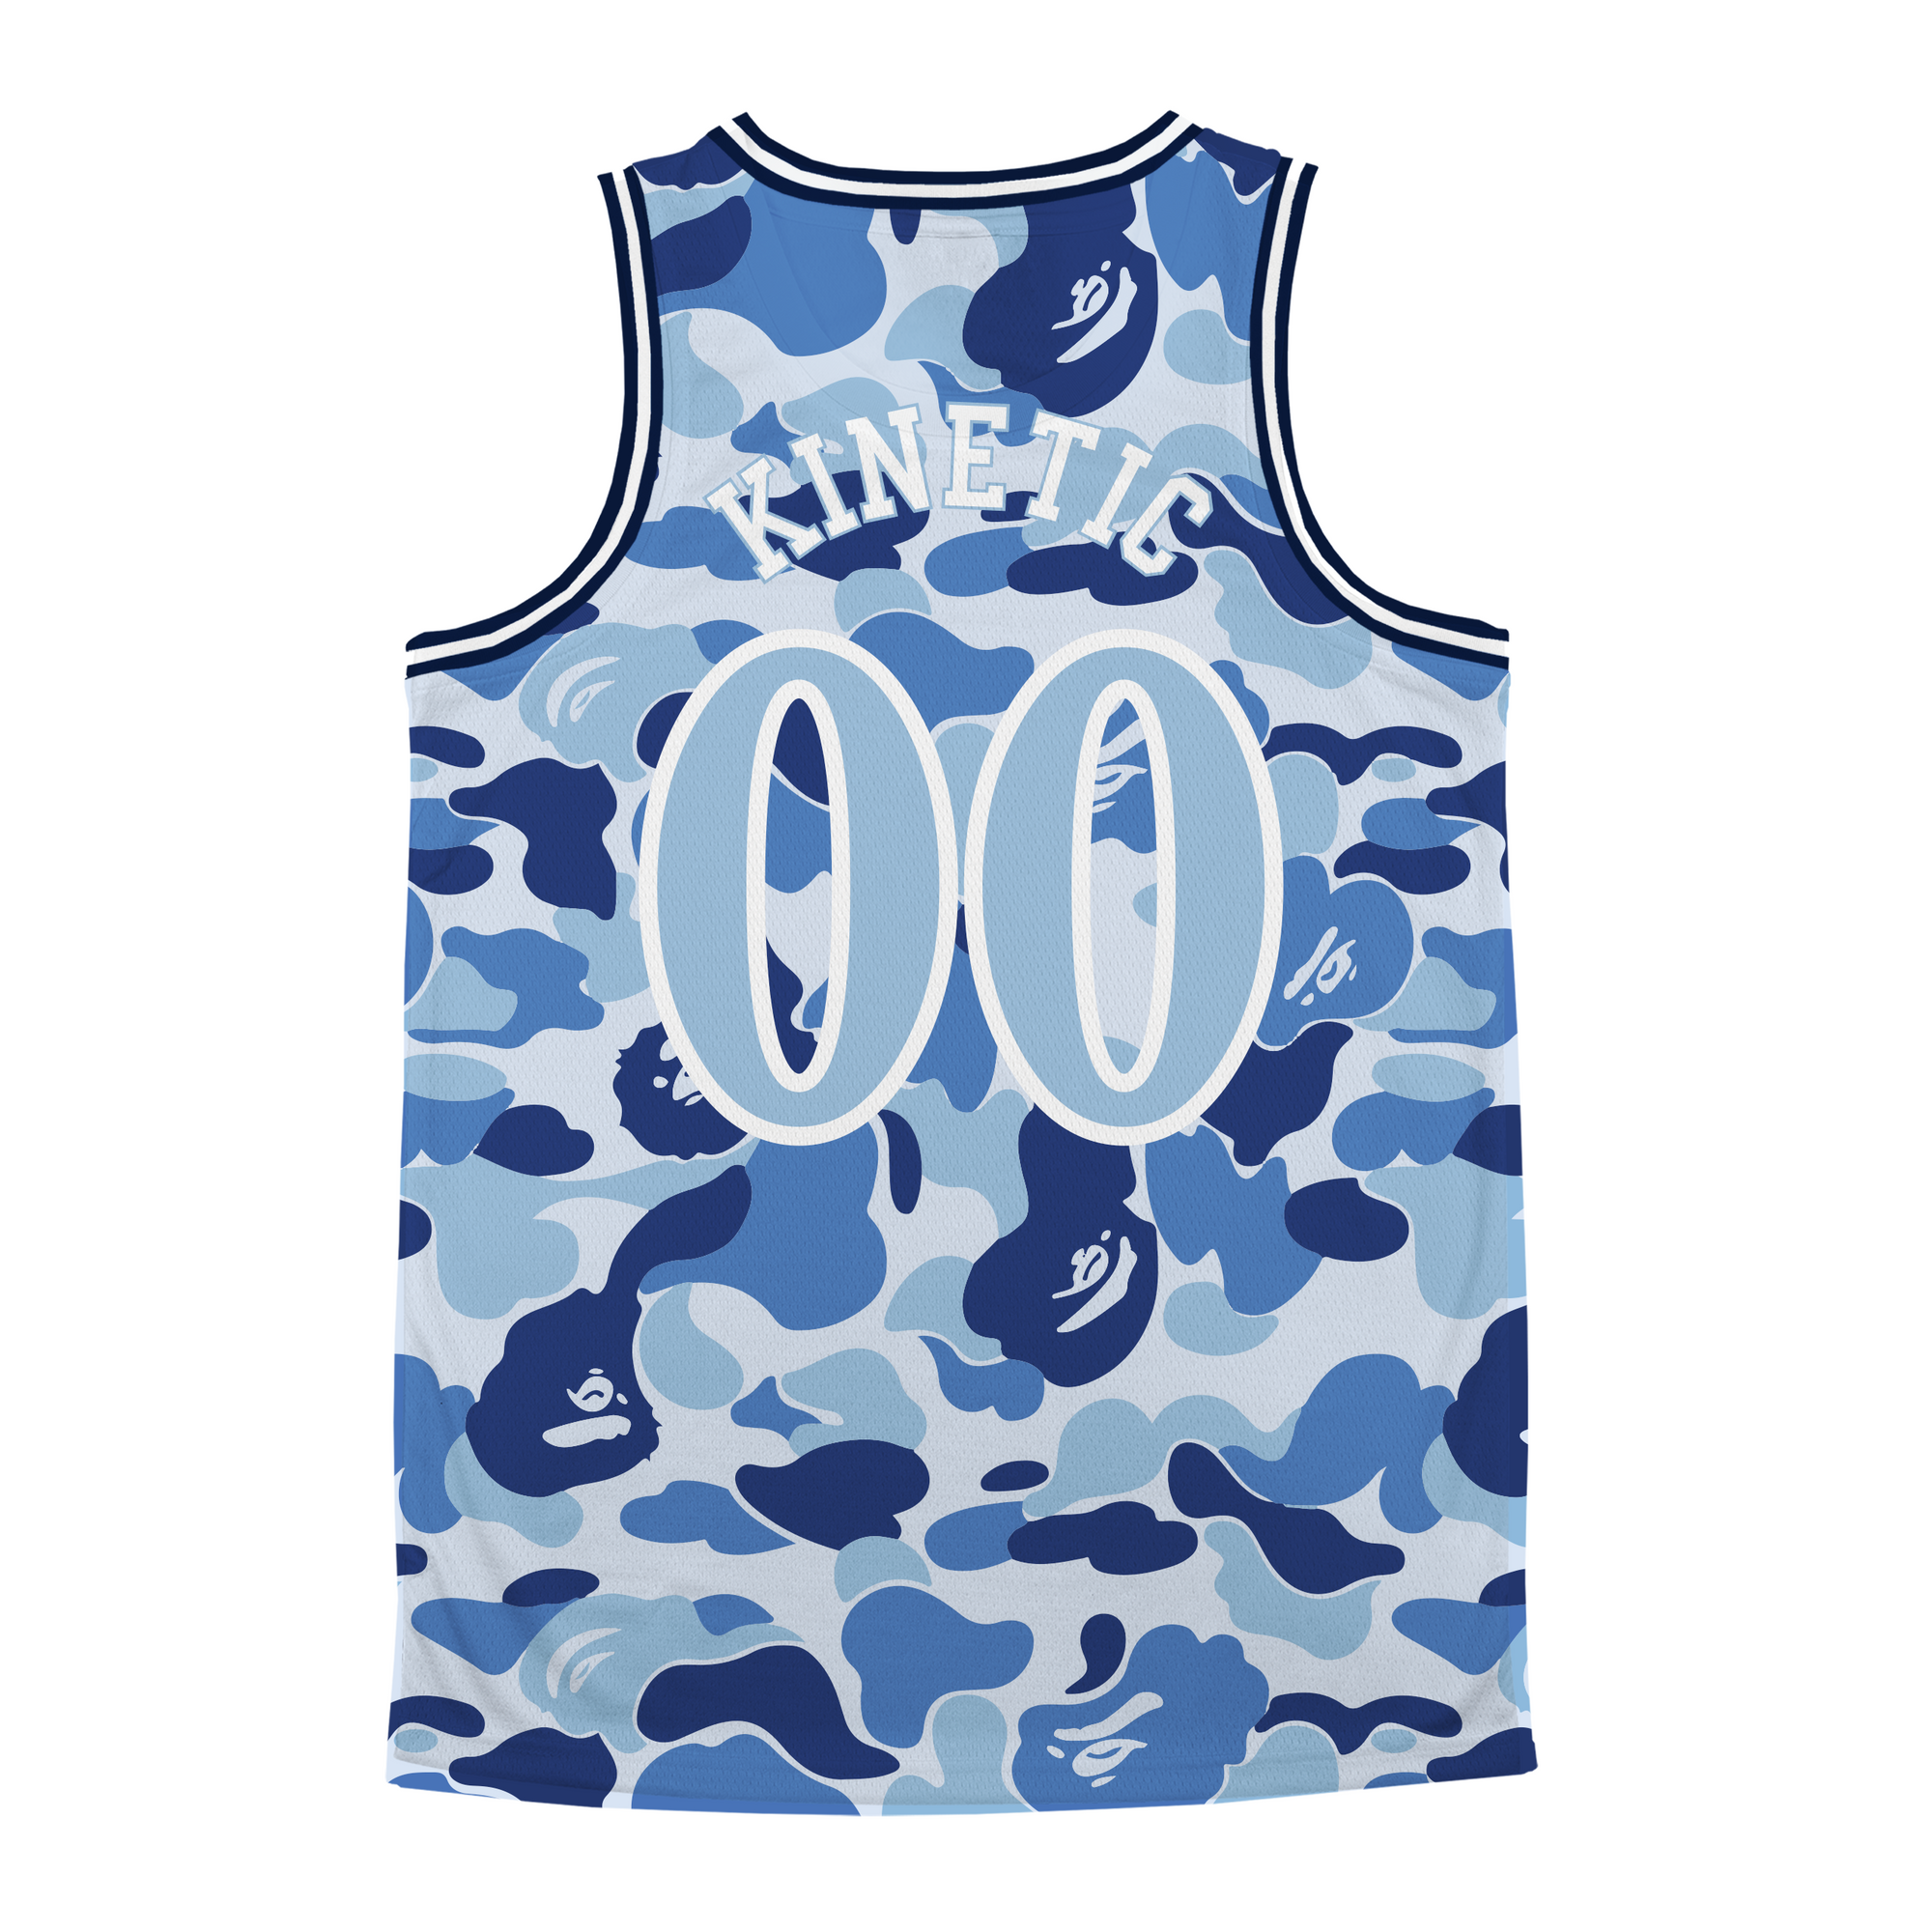 Sigma Chi - Blue Camo Basketball Jersey